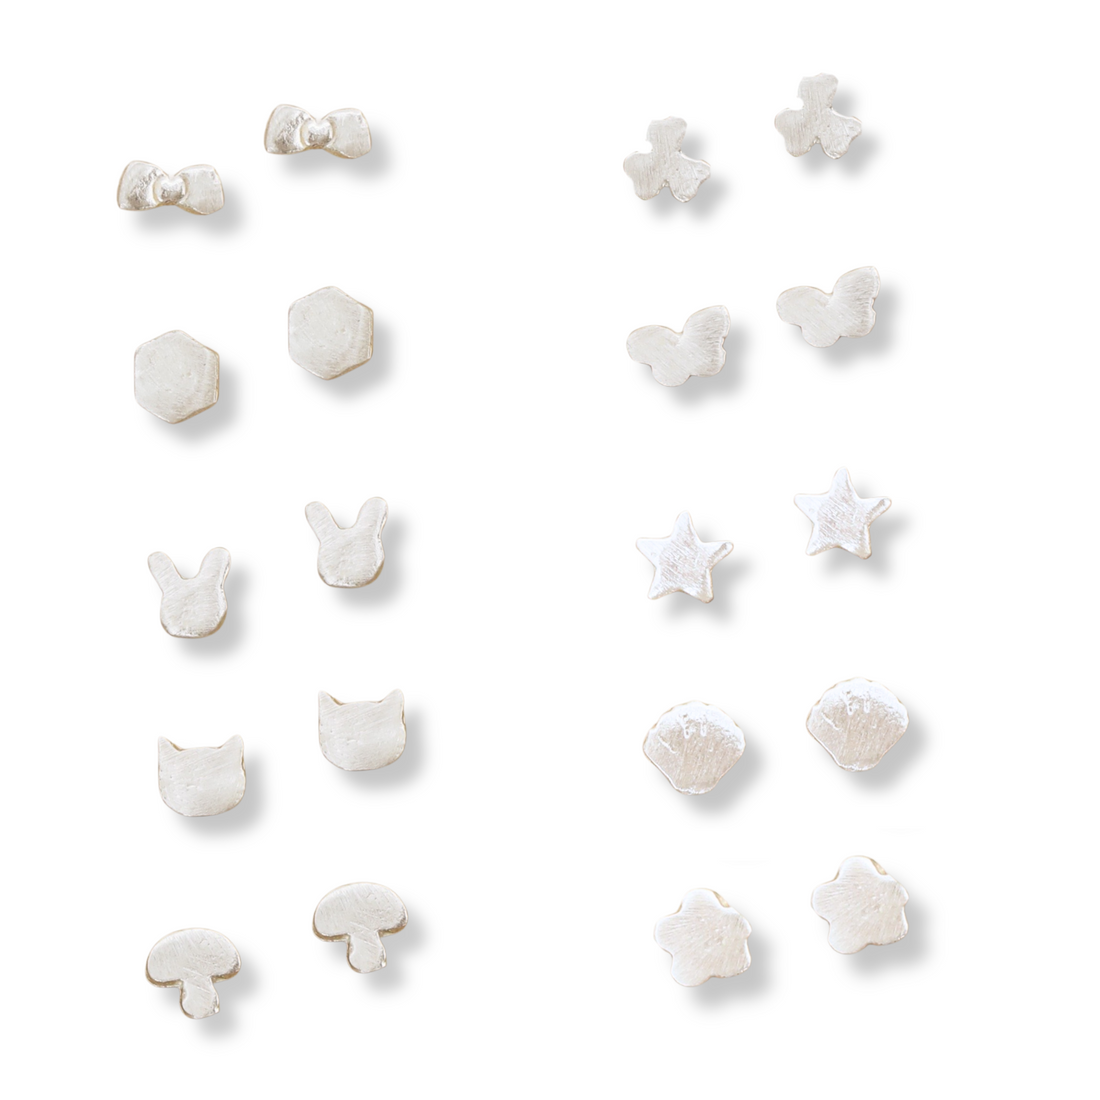 Micro Stud Earrings - choose from Bow, Bunny, Clover, Kitty, Star, Mushroom, Sakura and more